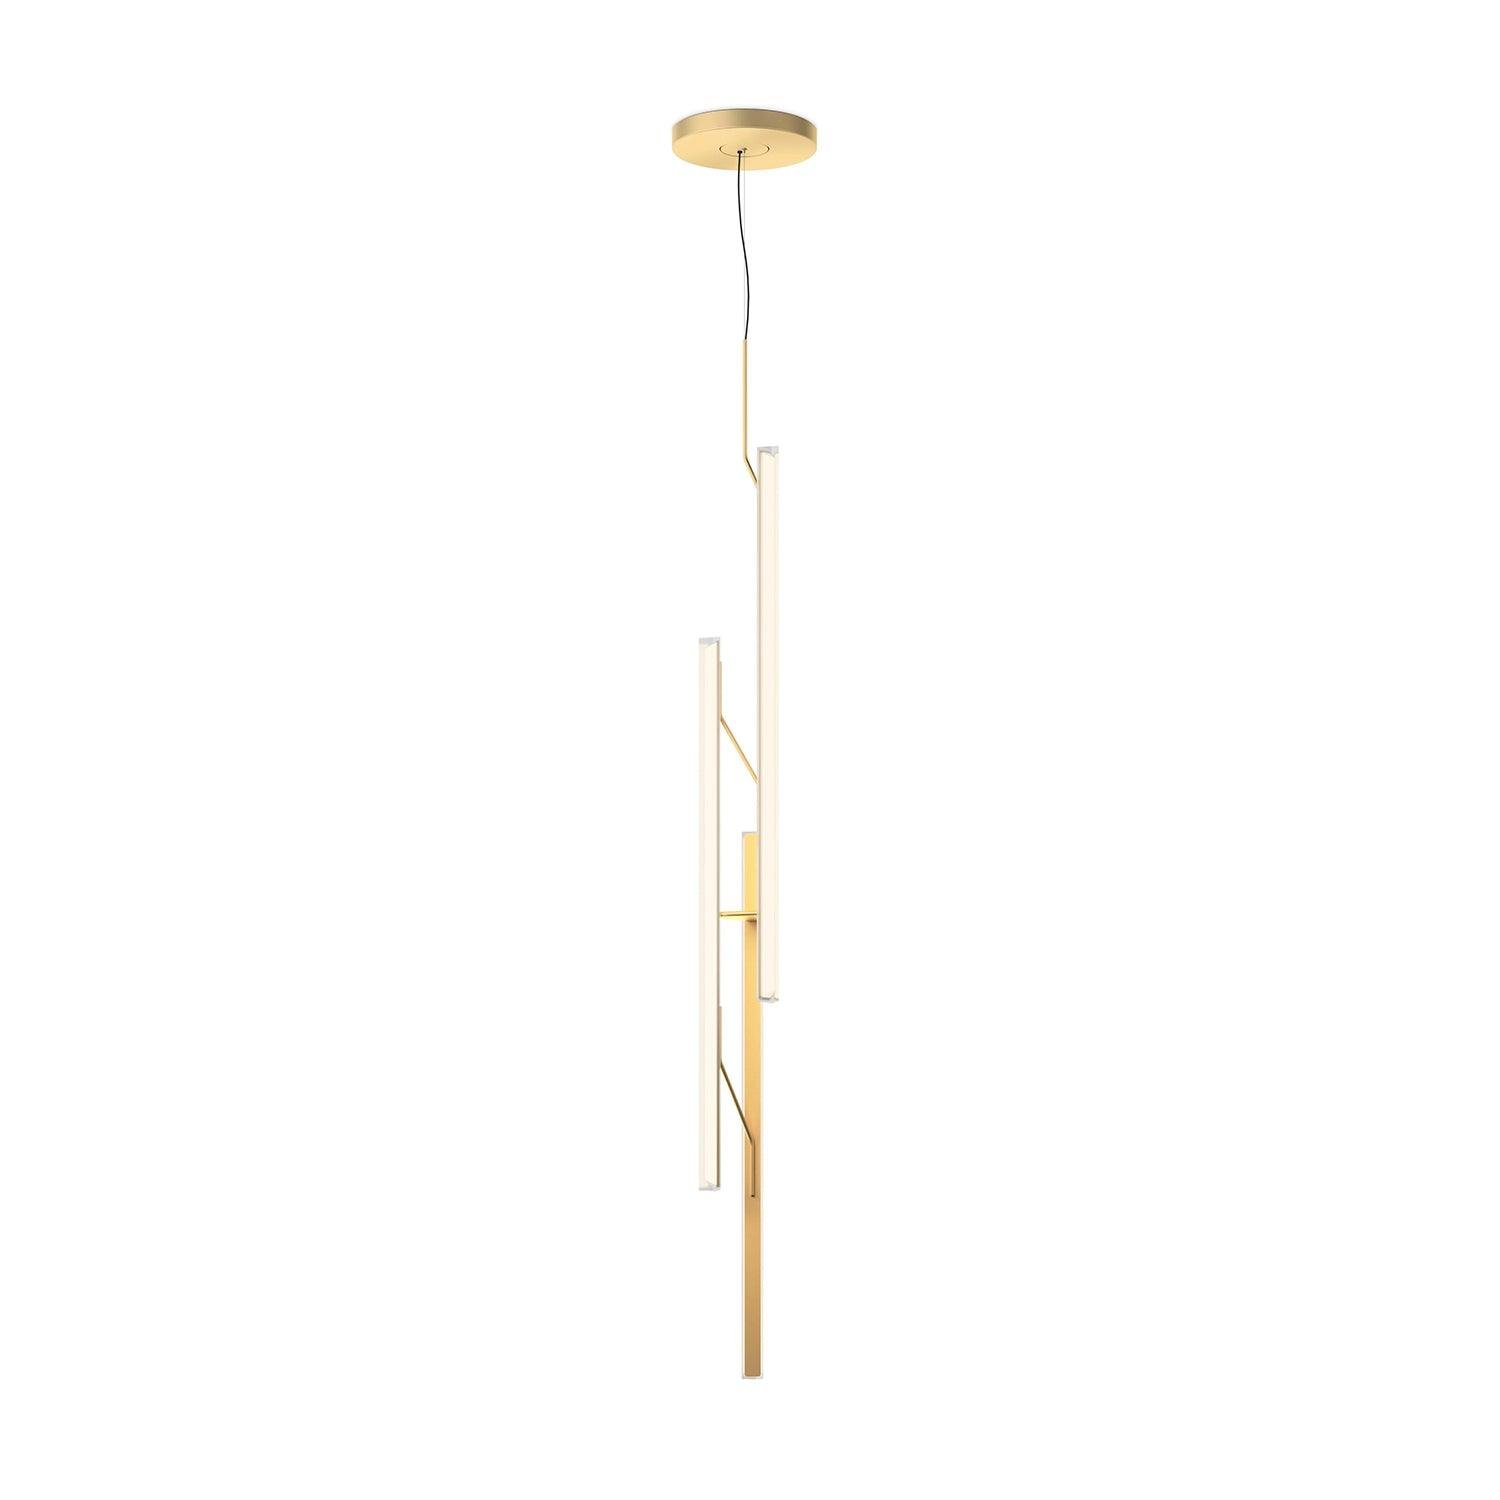 Halo Jewel Pendant Light in Gold with Cool Light, Diameter 11.8″ x Height 55.1″ (30cm x 140cm)